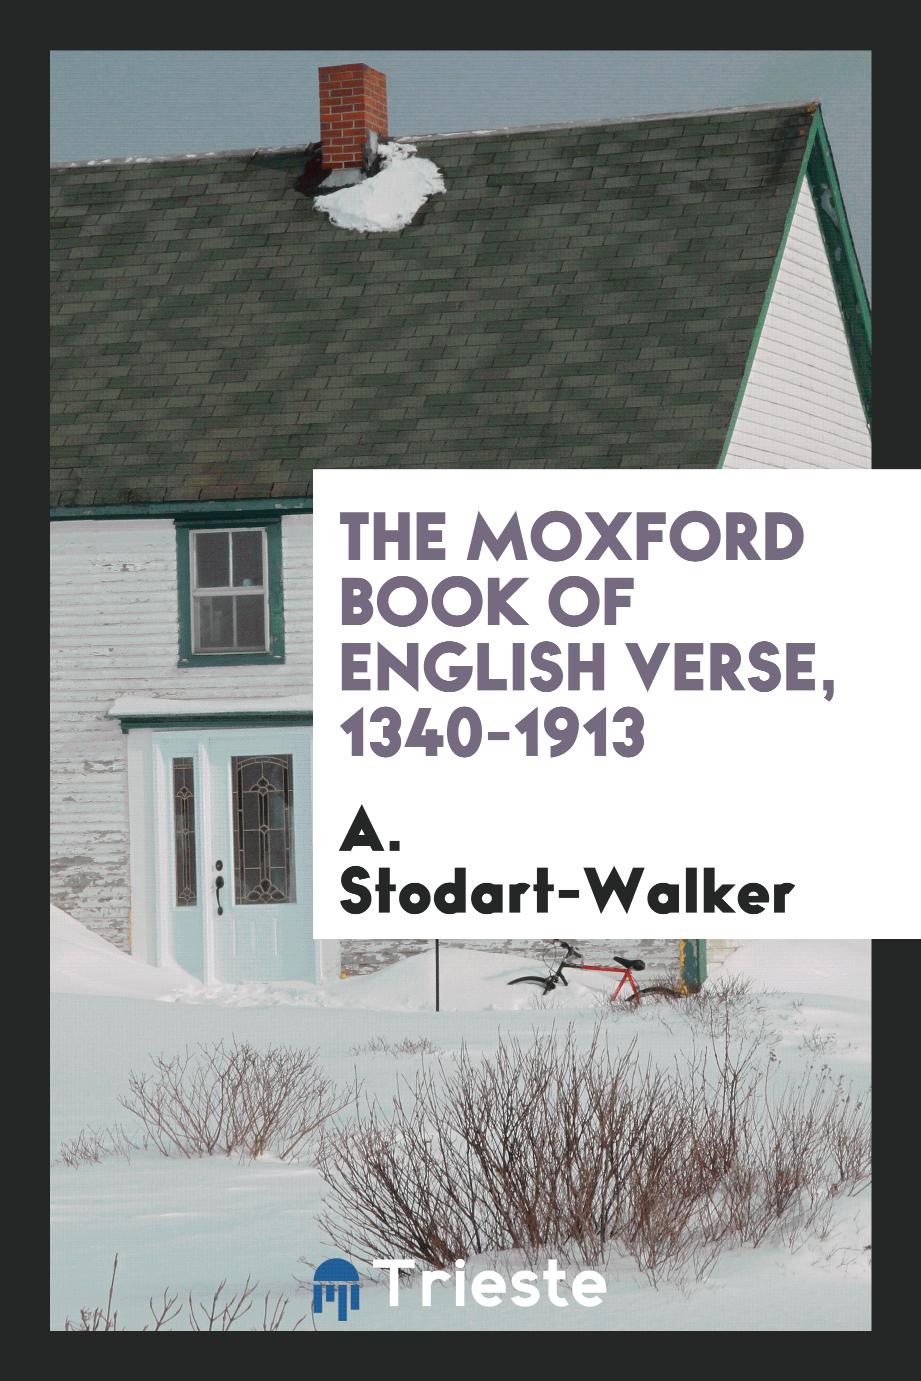 The Moxford book of English verse, 1340-1913